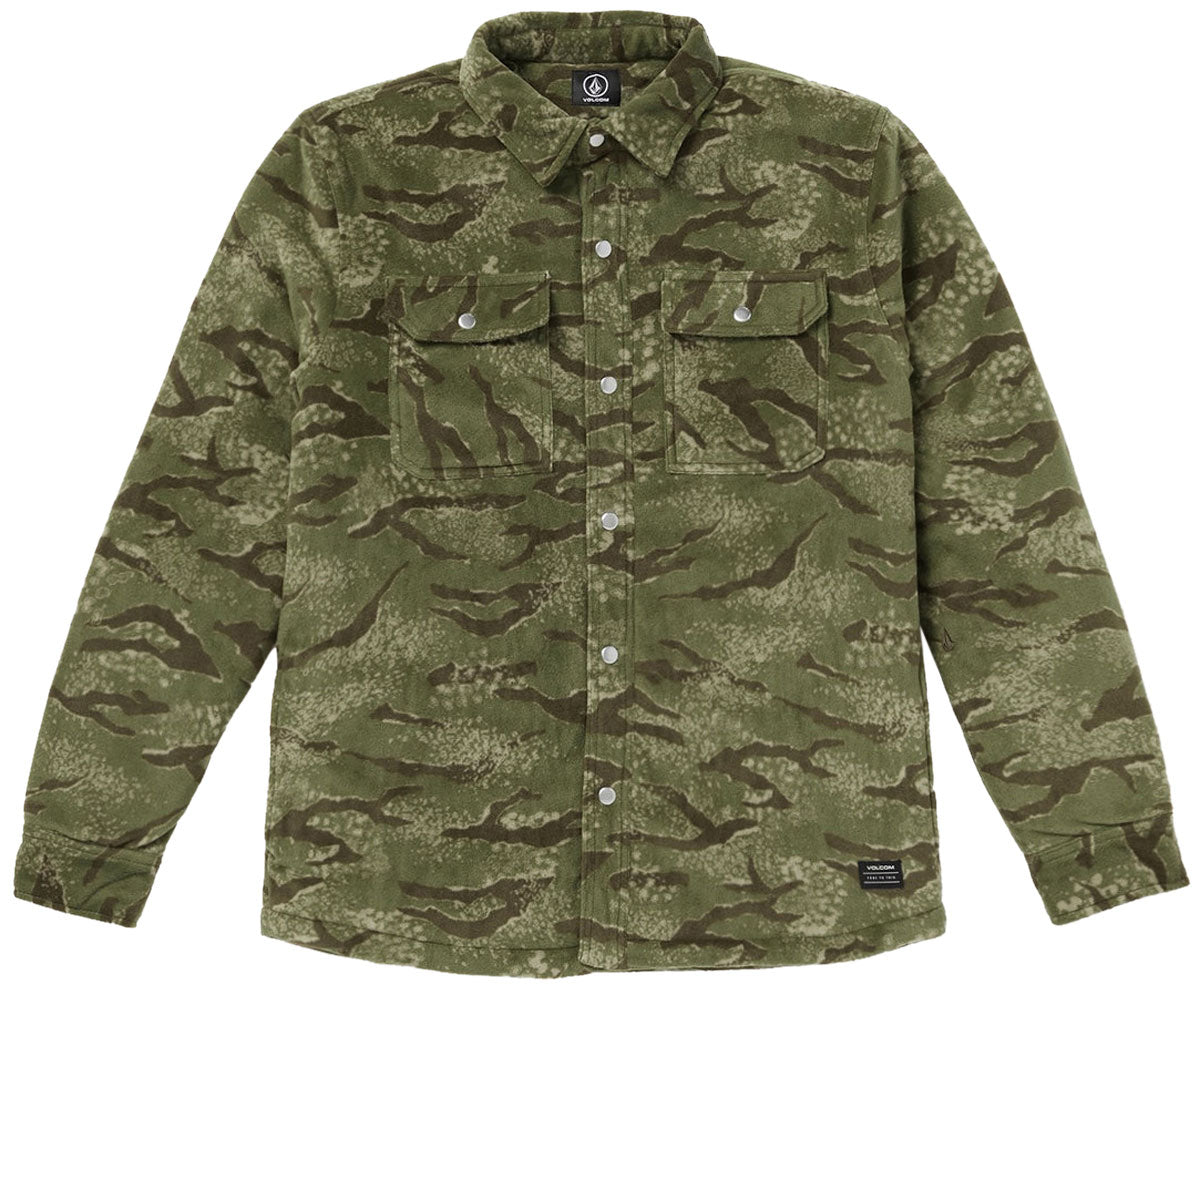 Volcom Bowered Fleece Long Sleeve Sweatshirt - Squadron Green image 1